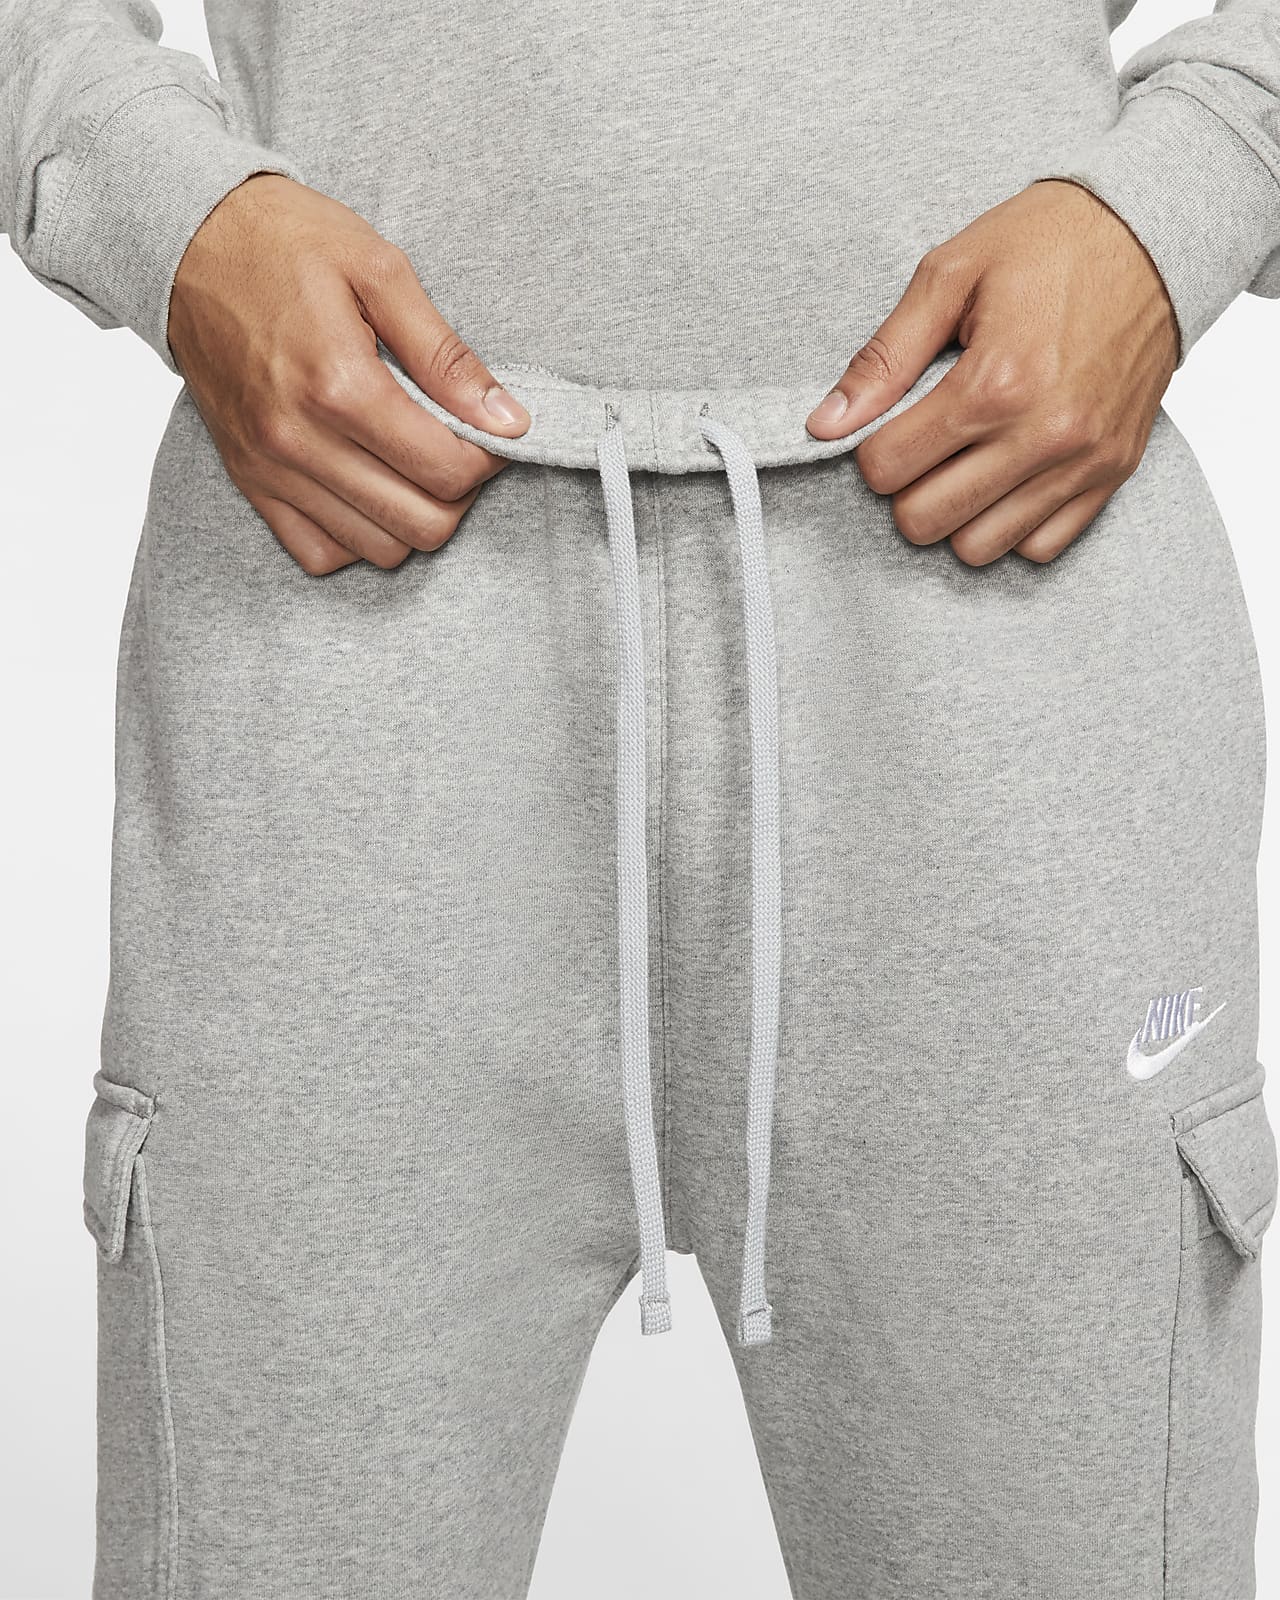 Nike - Club - Pantalon de jogging - Gris anthracite